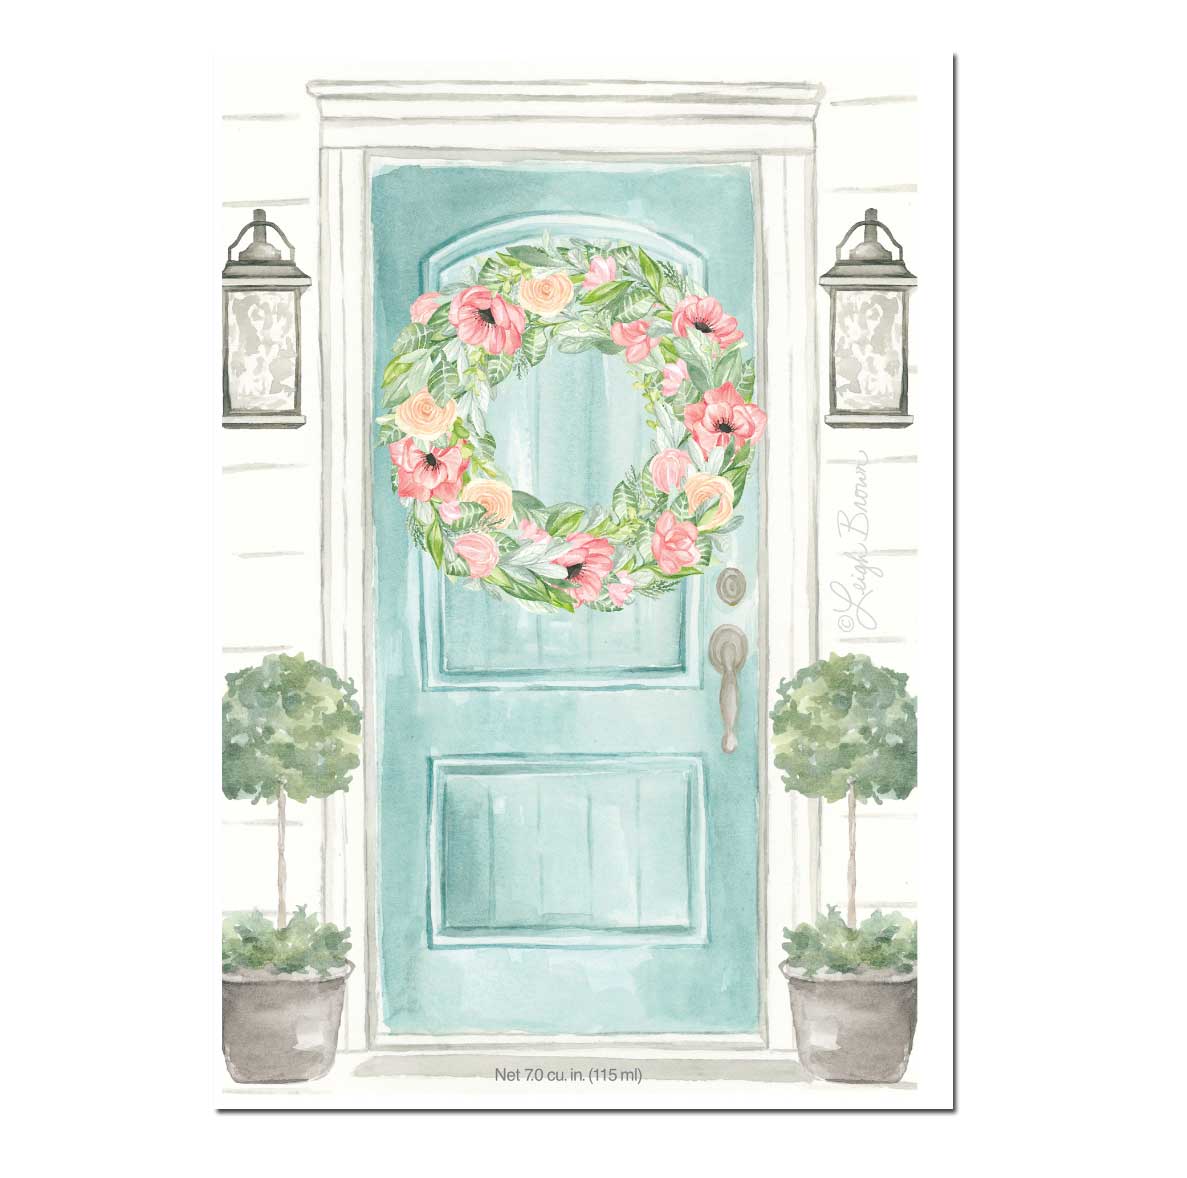 Dufttüte gr "Spring Door" von Fresh Scents